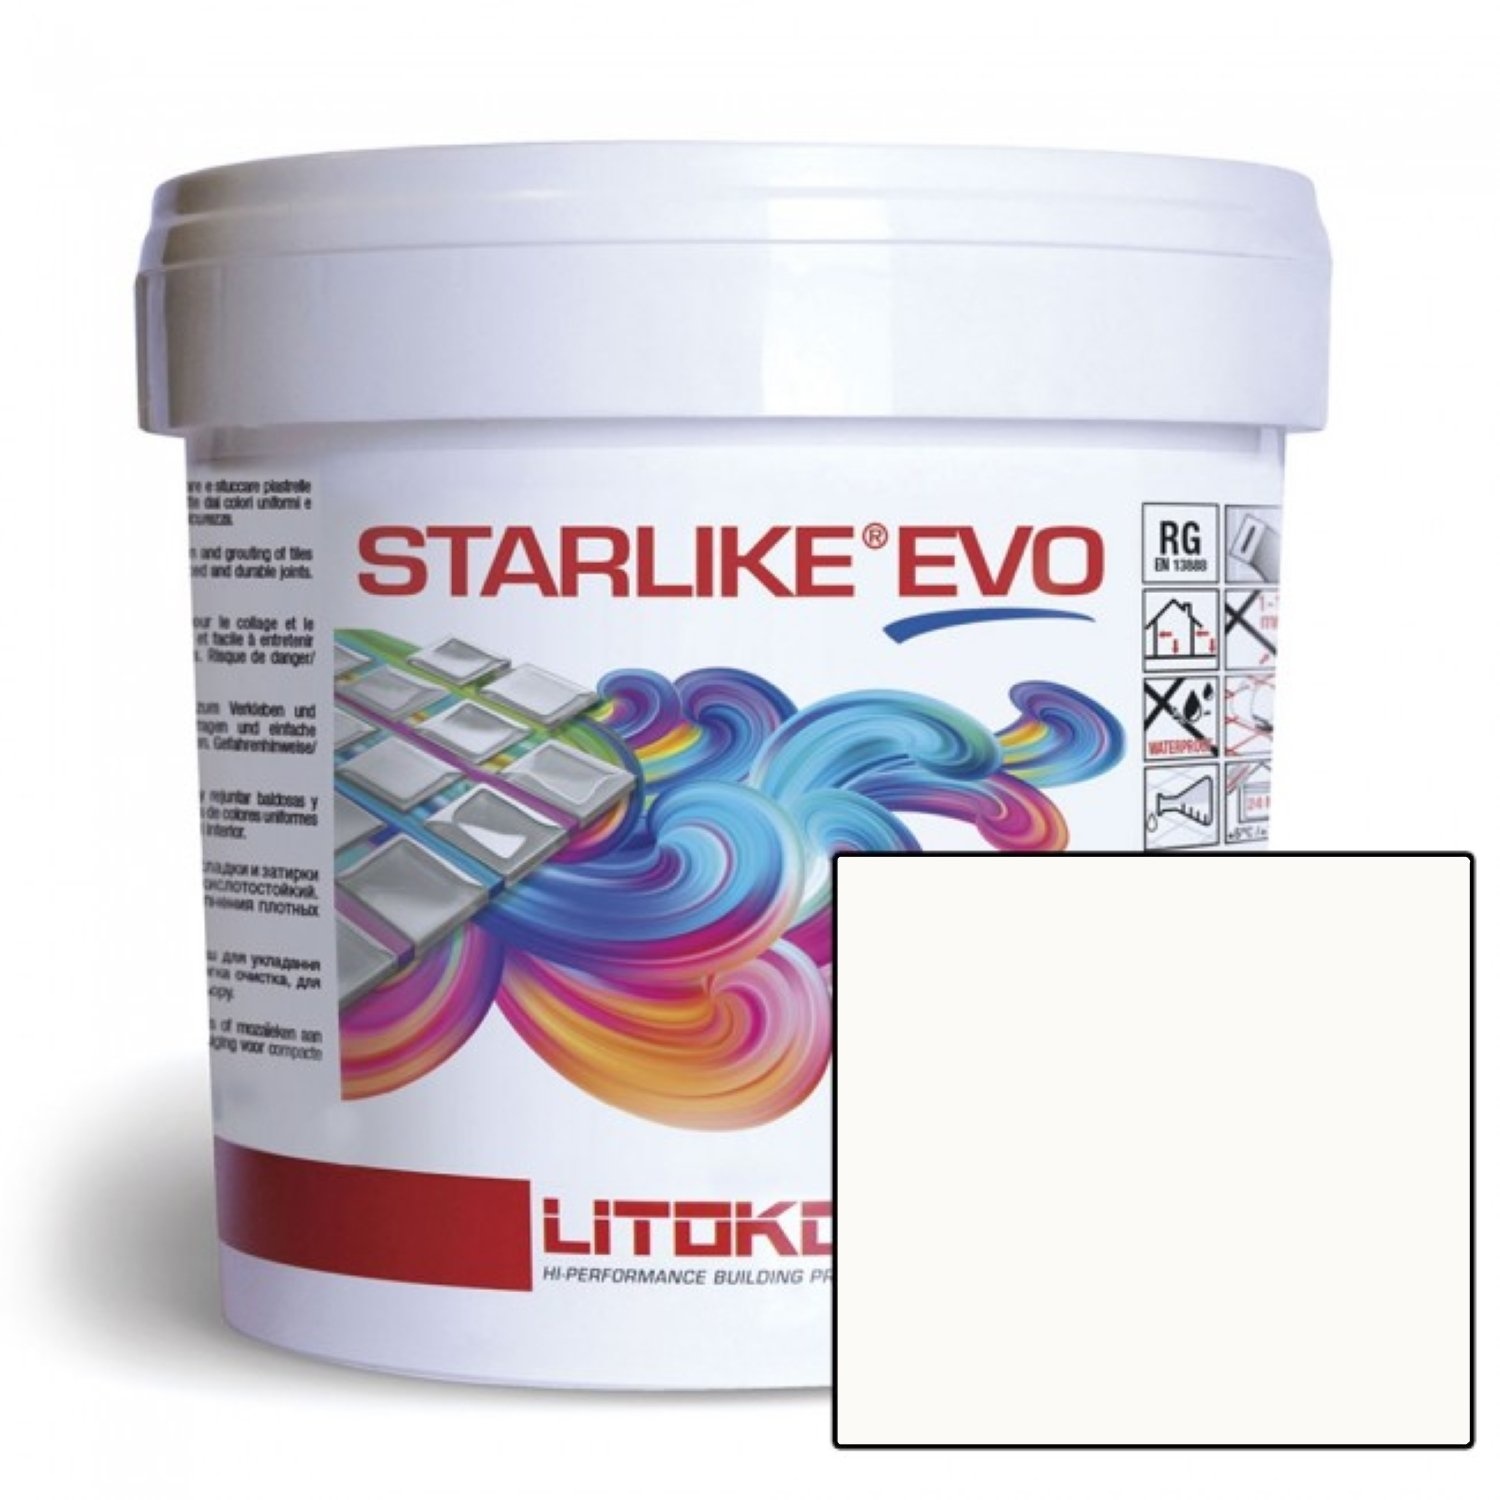 Starlike Voegmiddel 2 Componenten Epoxy 2,5 kg Evo 102 Bianco Ghiaccio Gebroken Wit Starlike